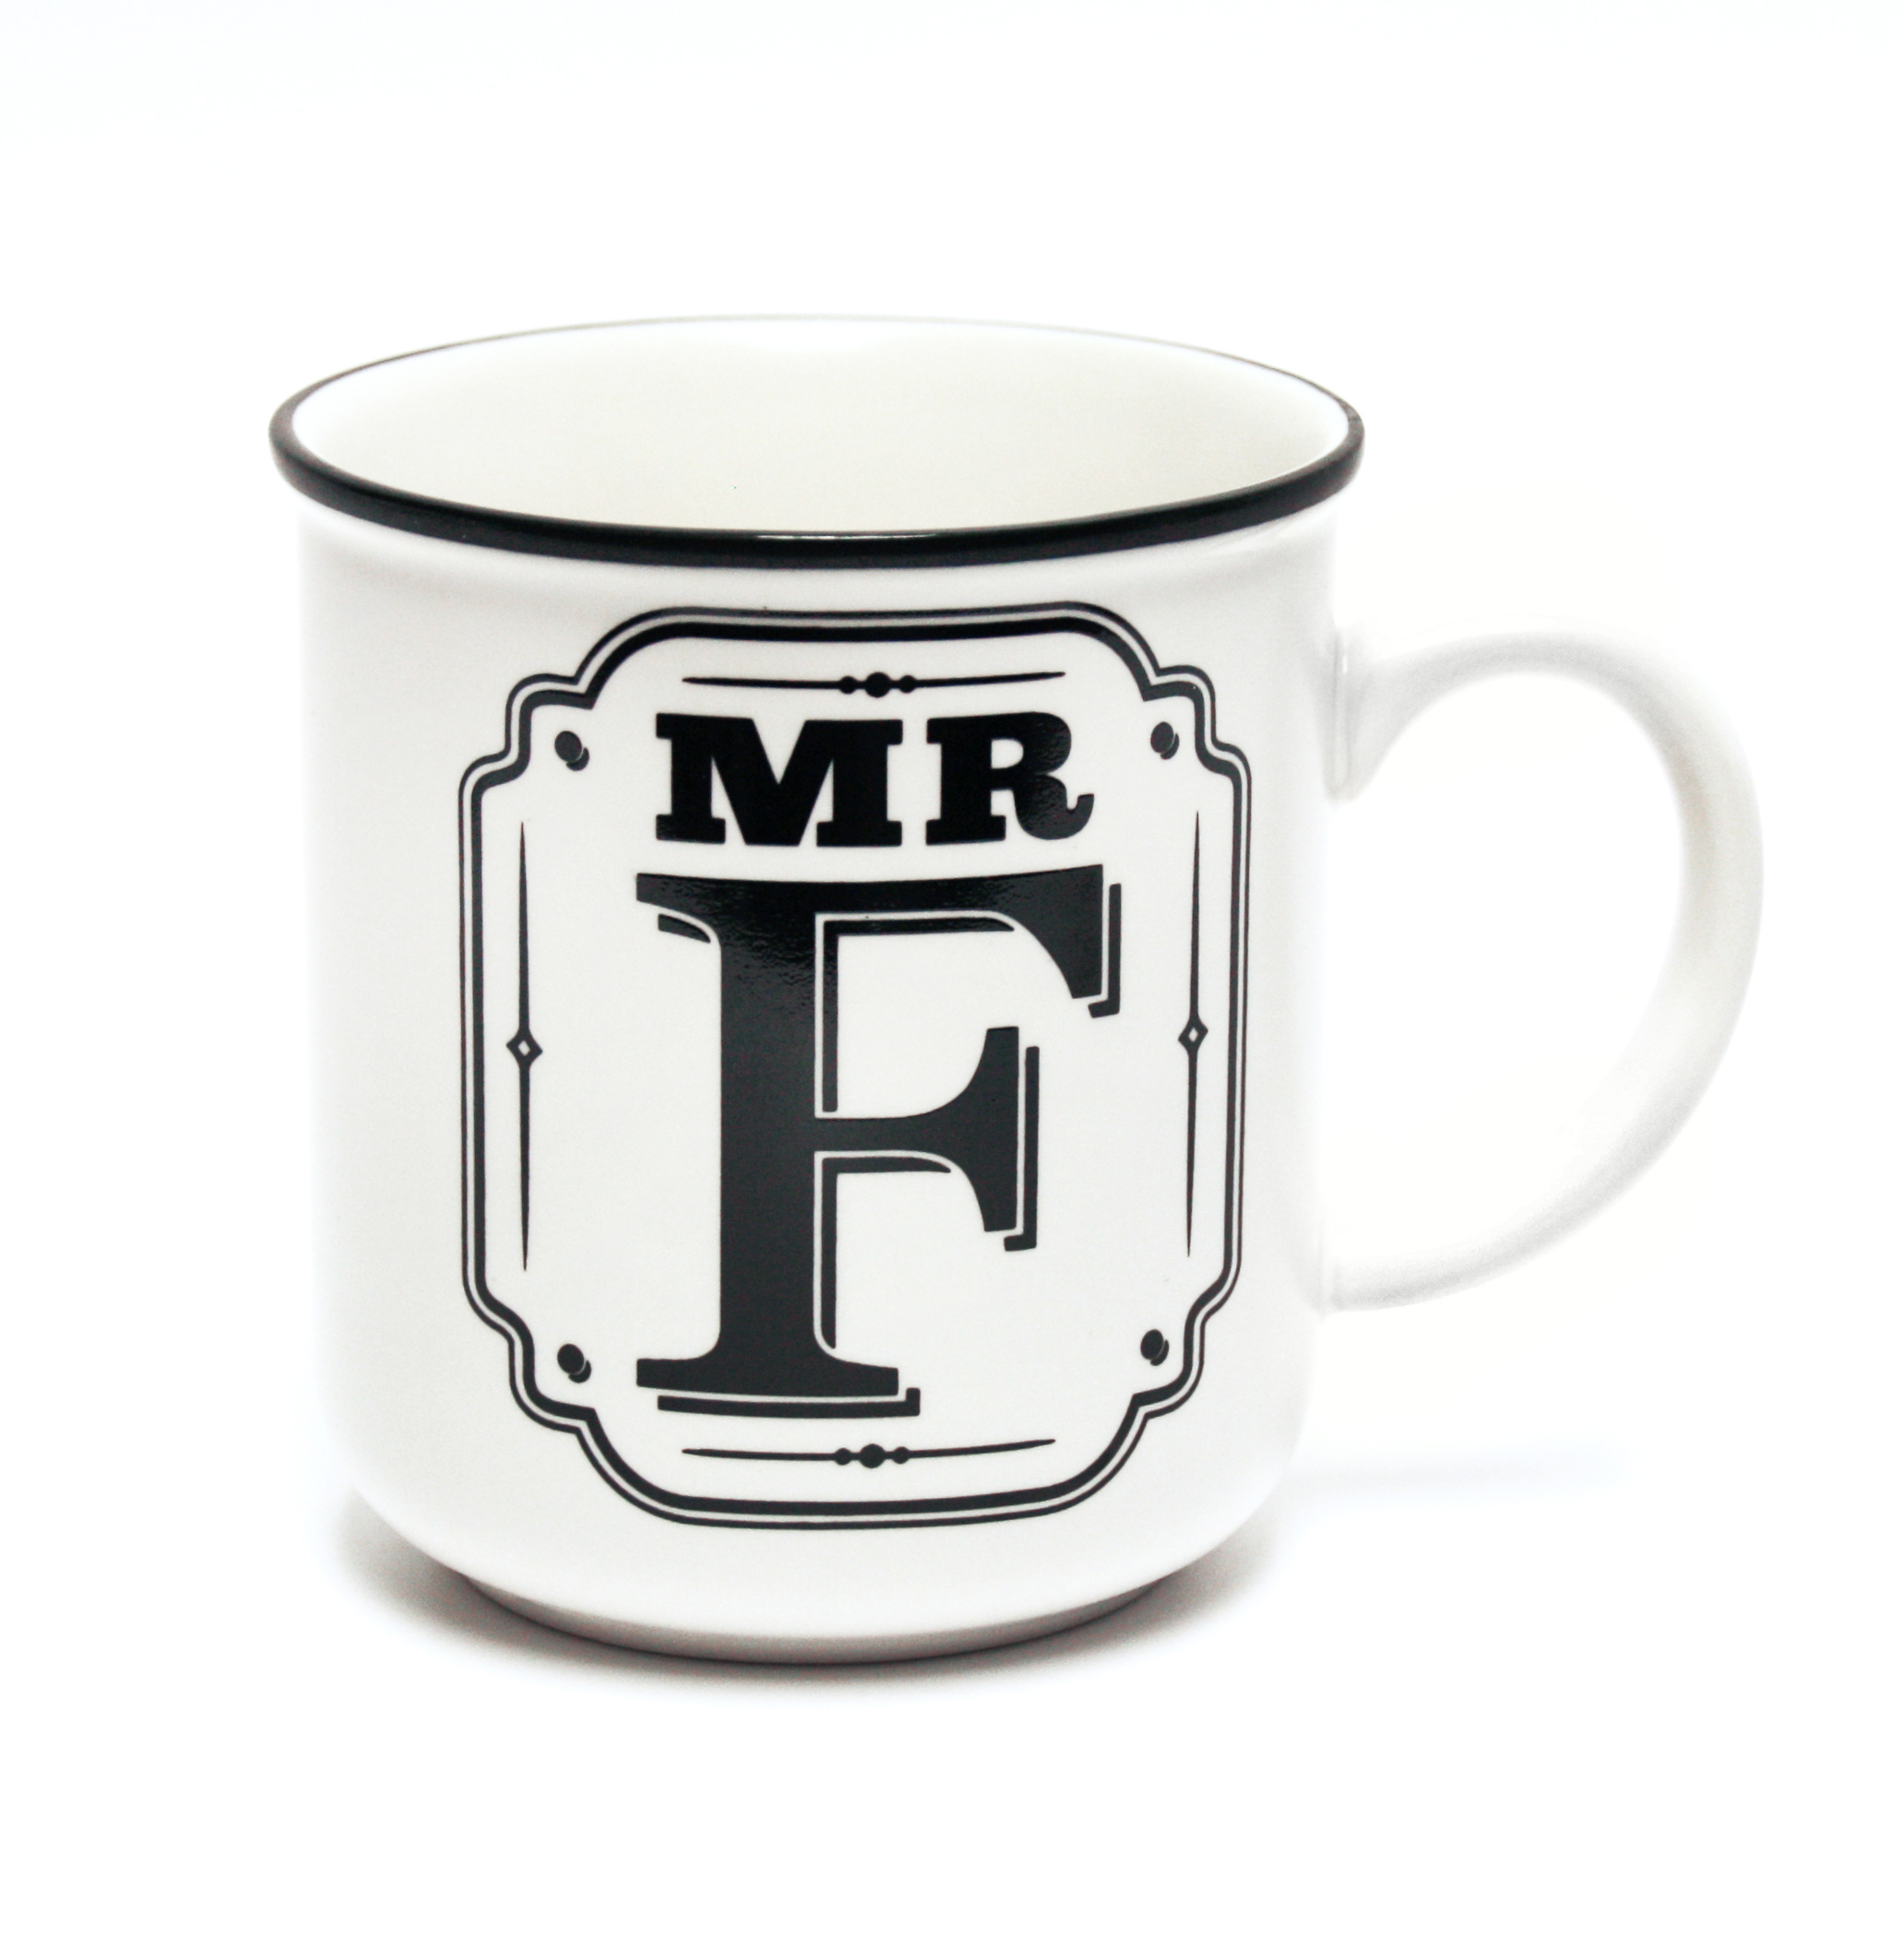 Personalised Coloured Handled Mug Gift Birthday Wedding Christening Christmas 